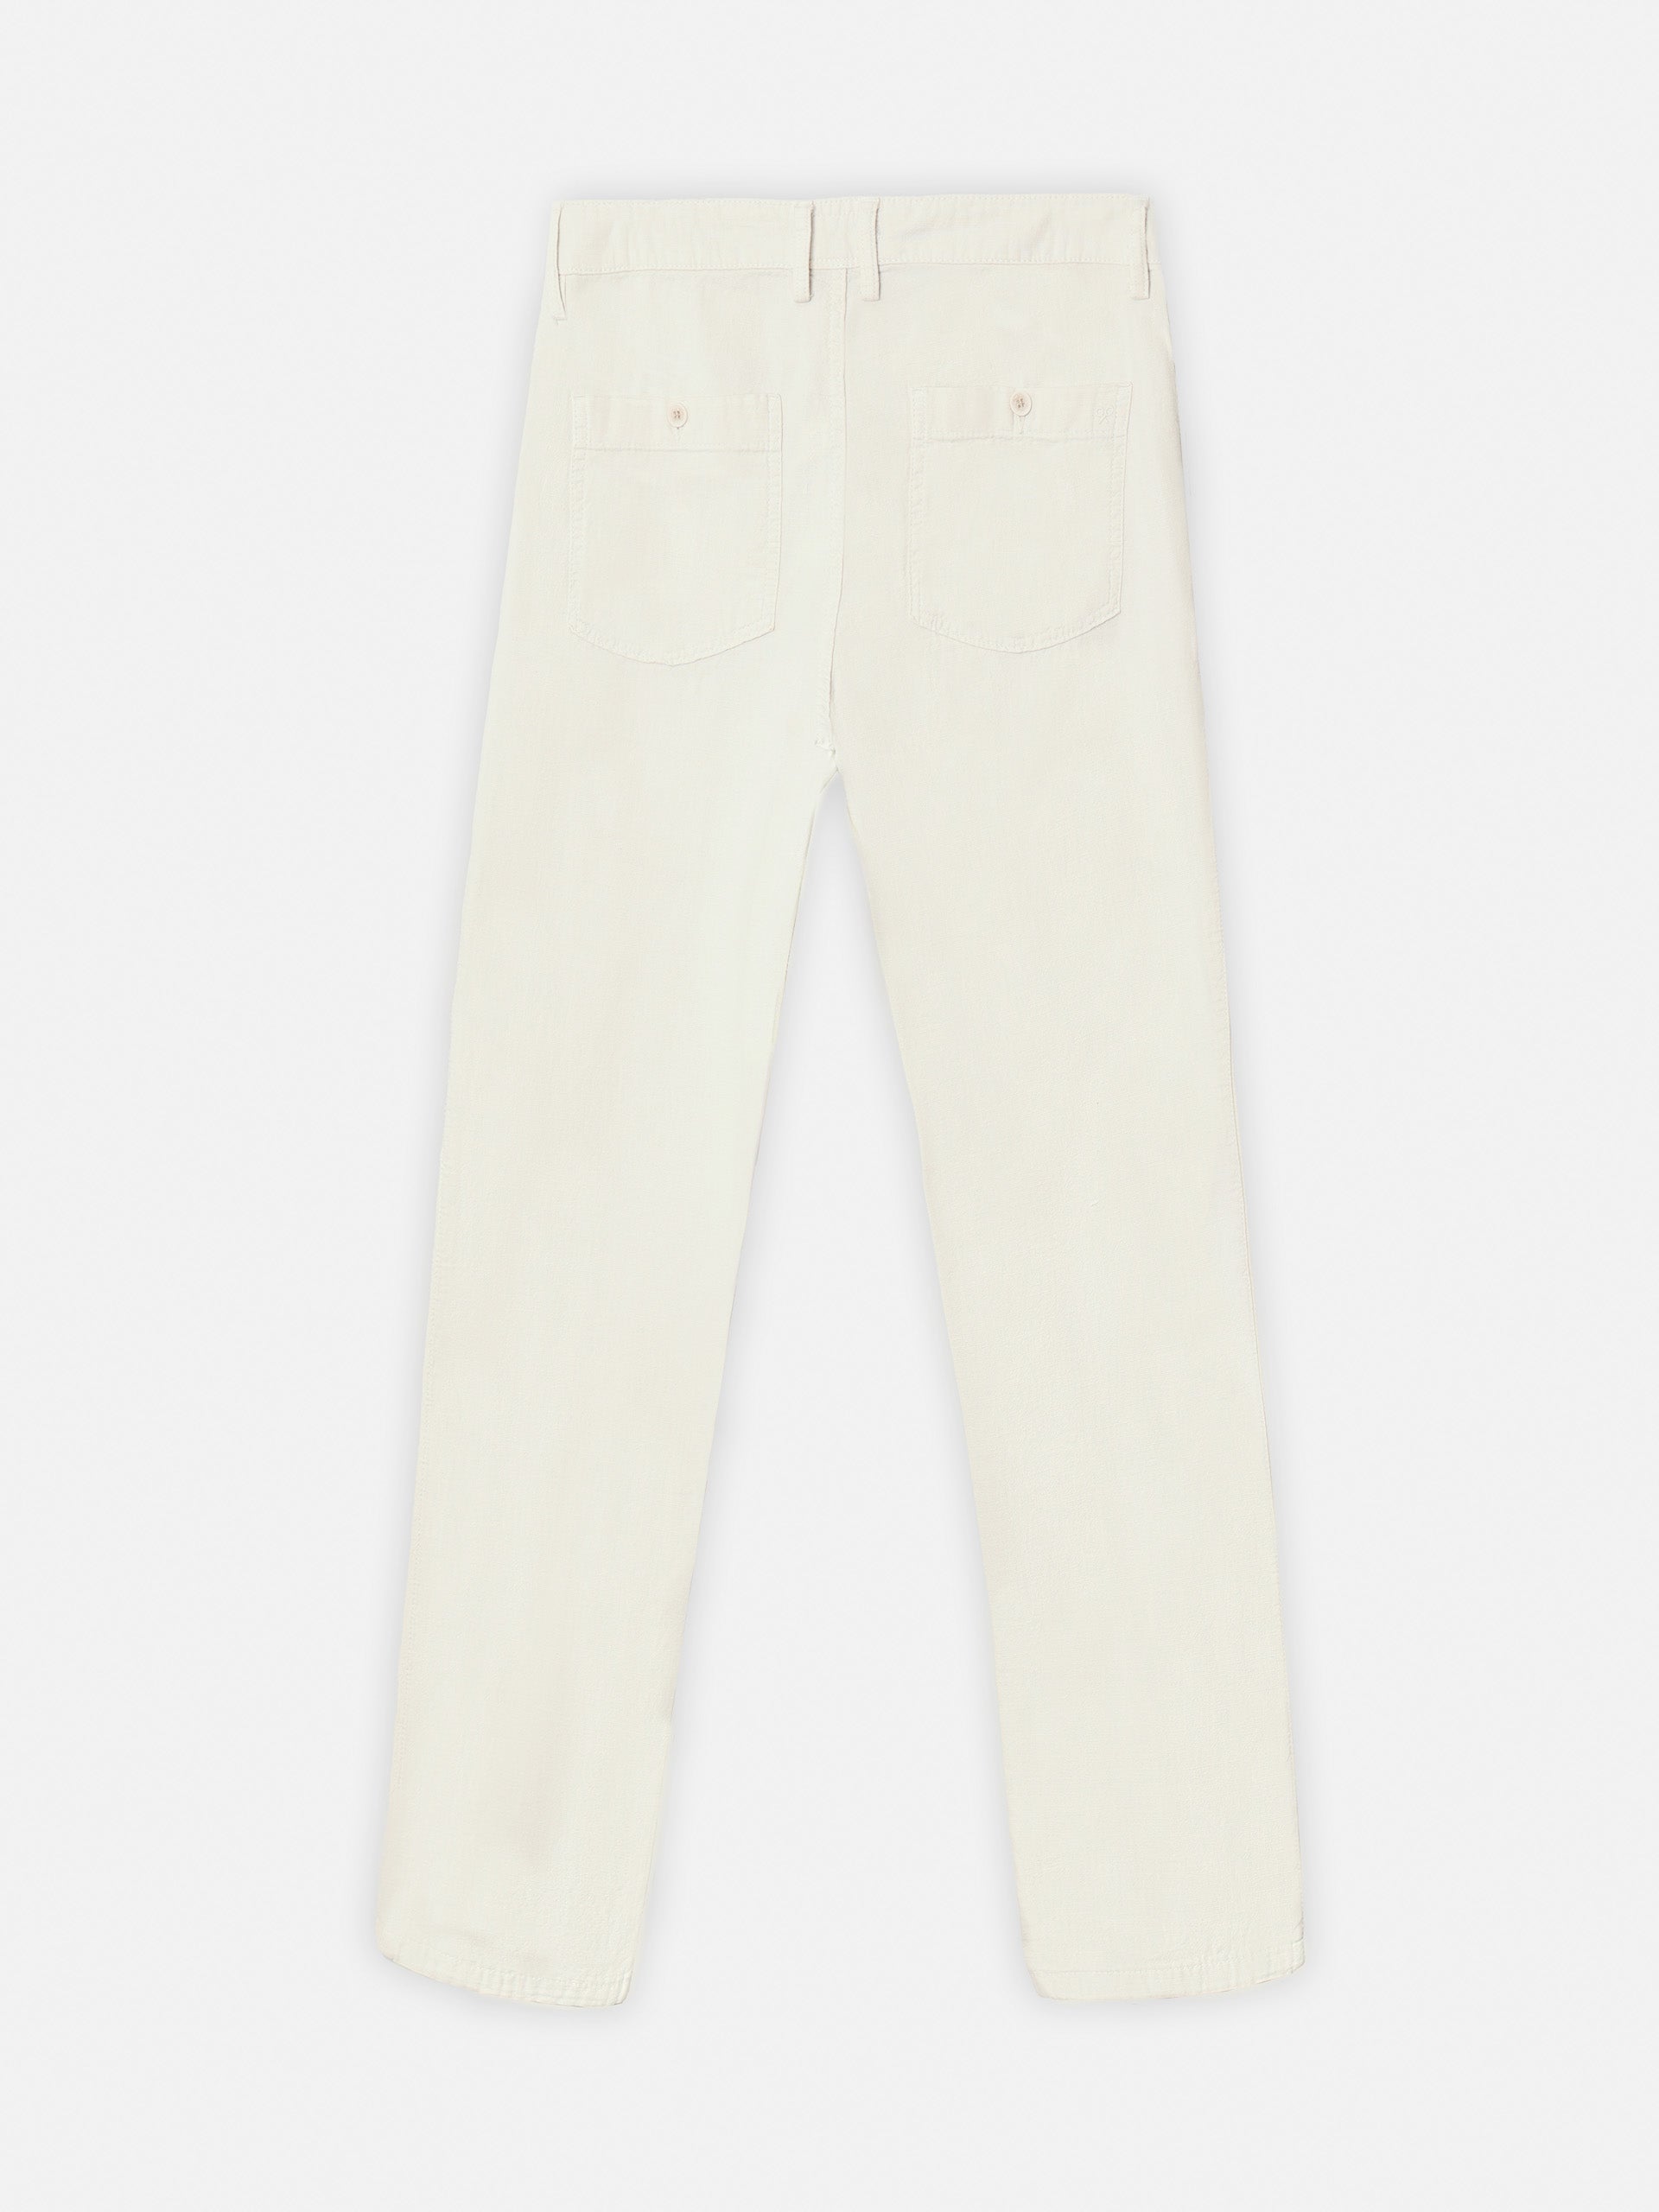 Pantalon sport chino lino beige claro